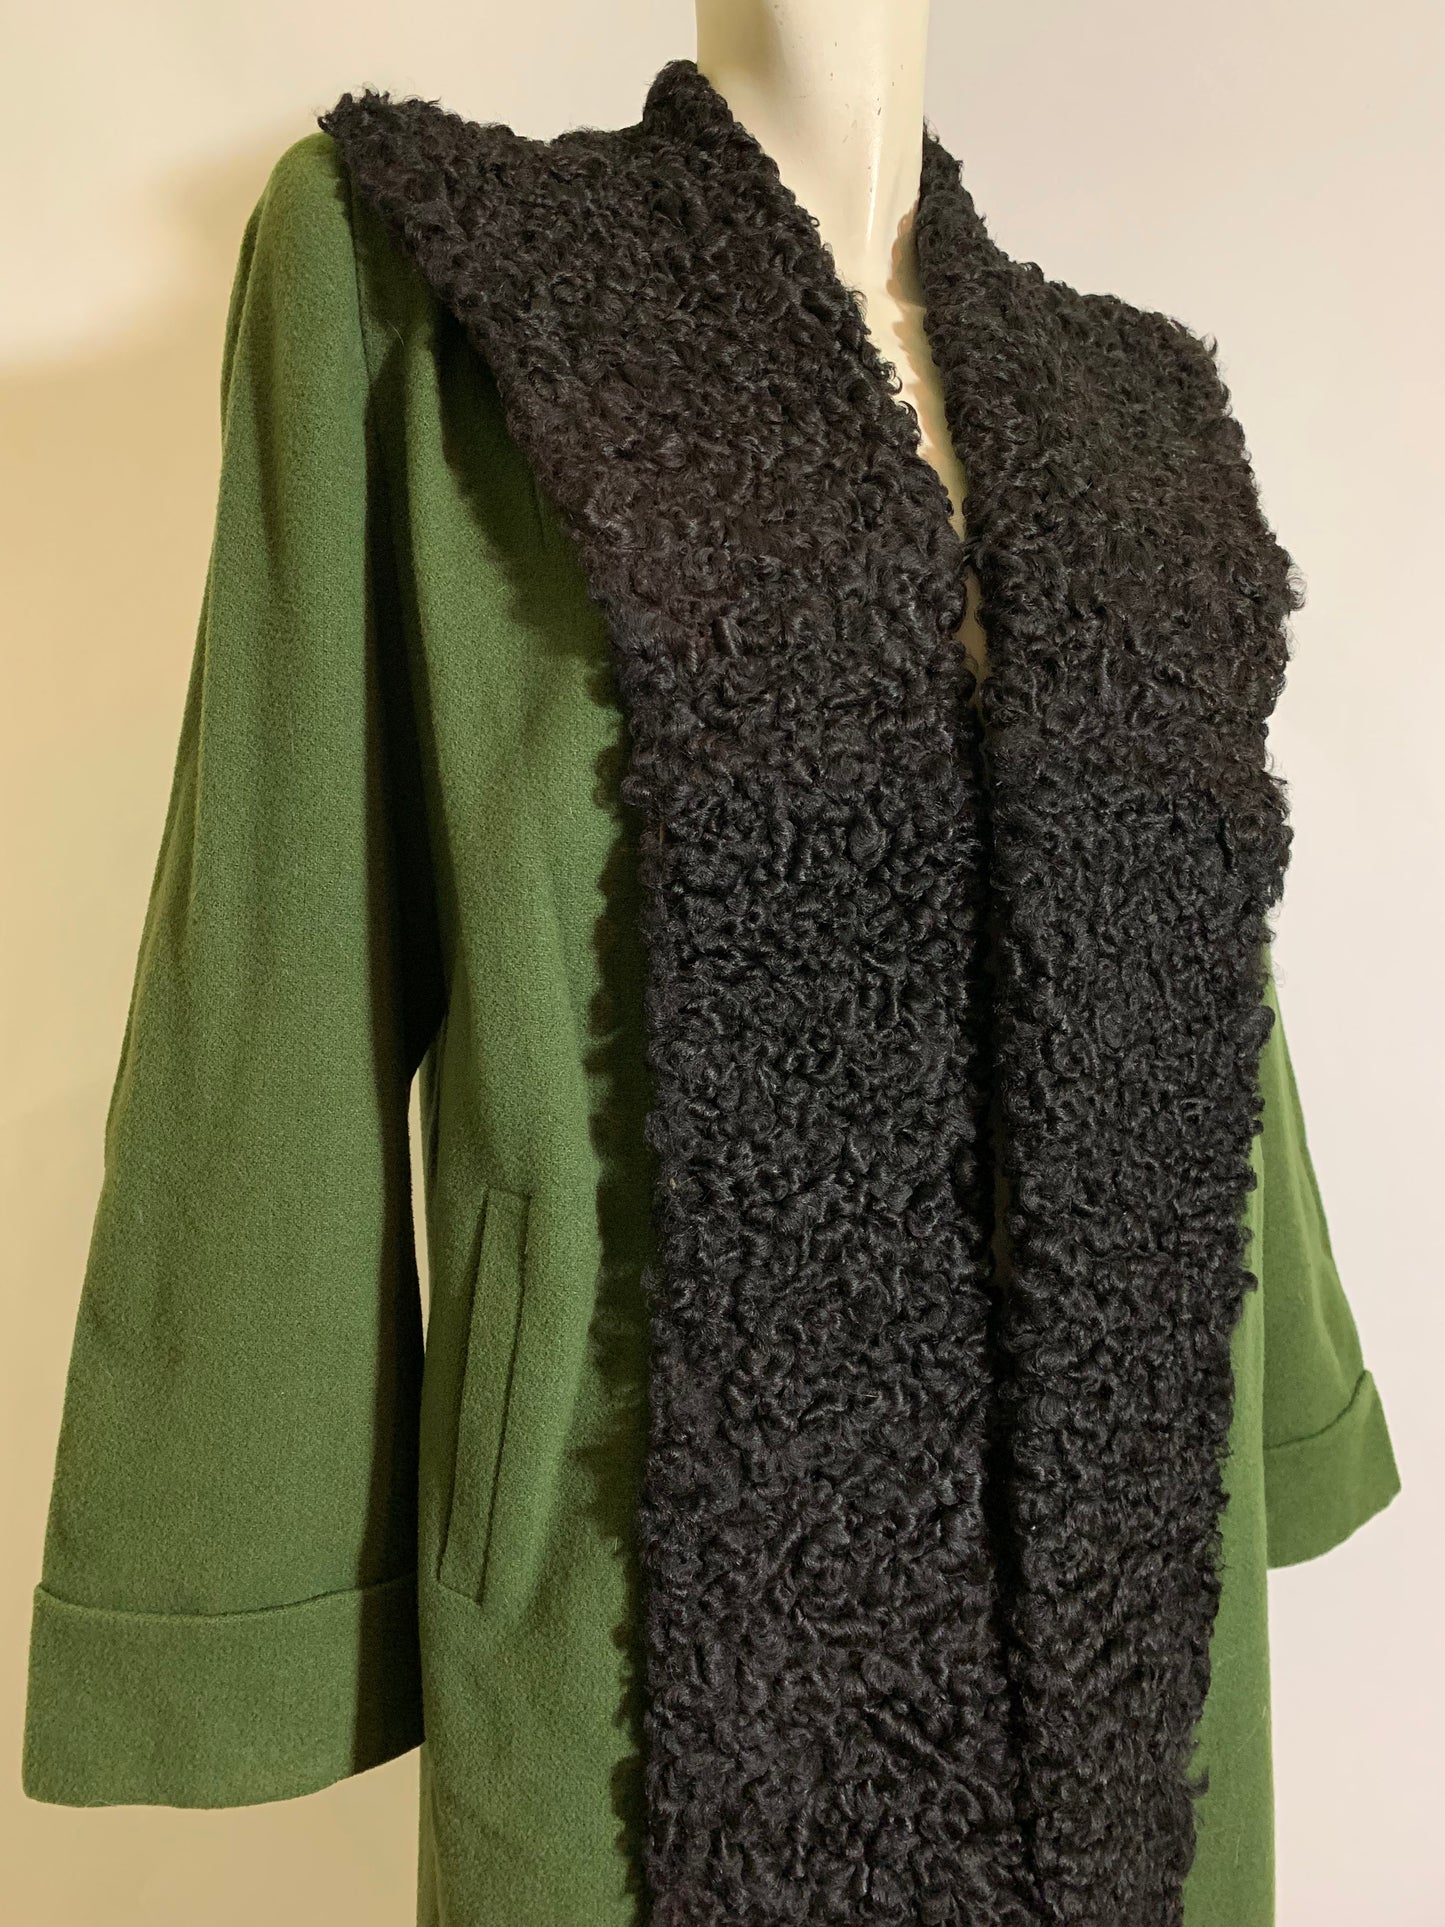 Olive Green Wool Coat with Dramatic Black Persian Lamb Collar circa 1940s